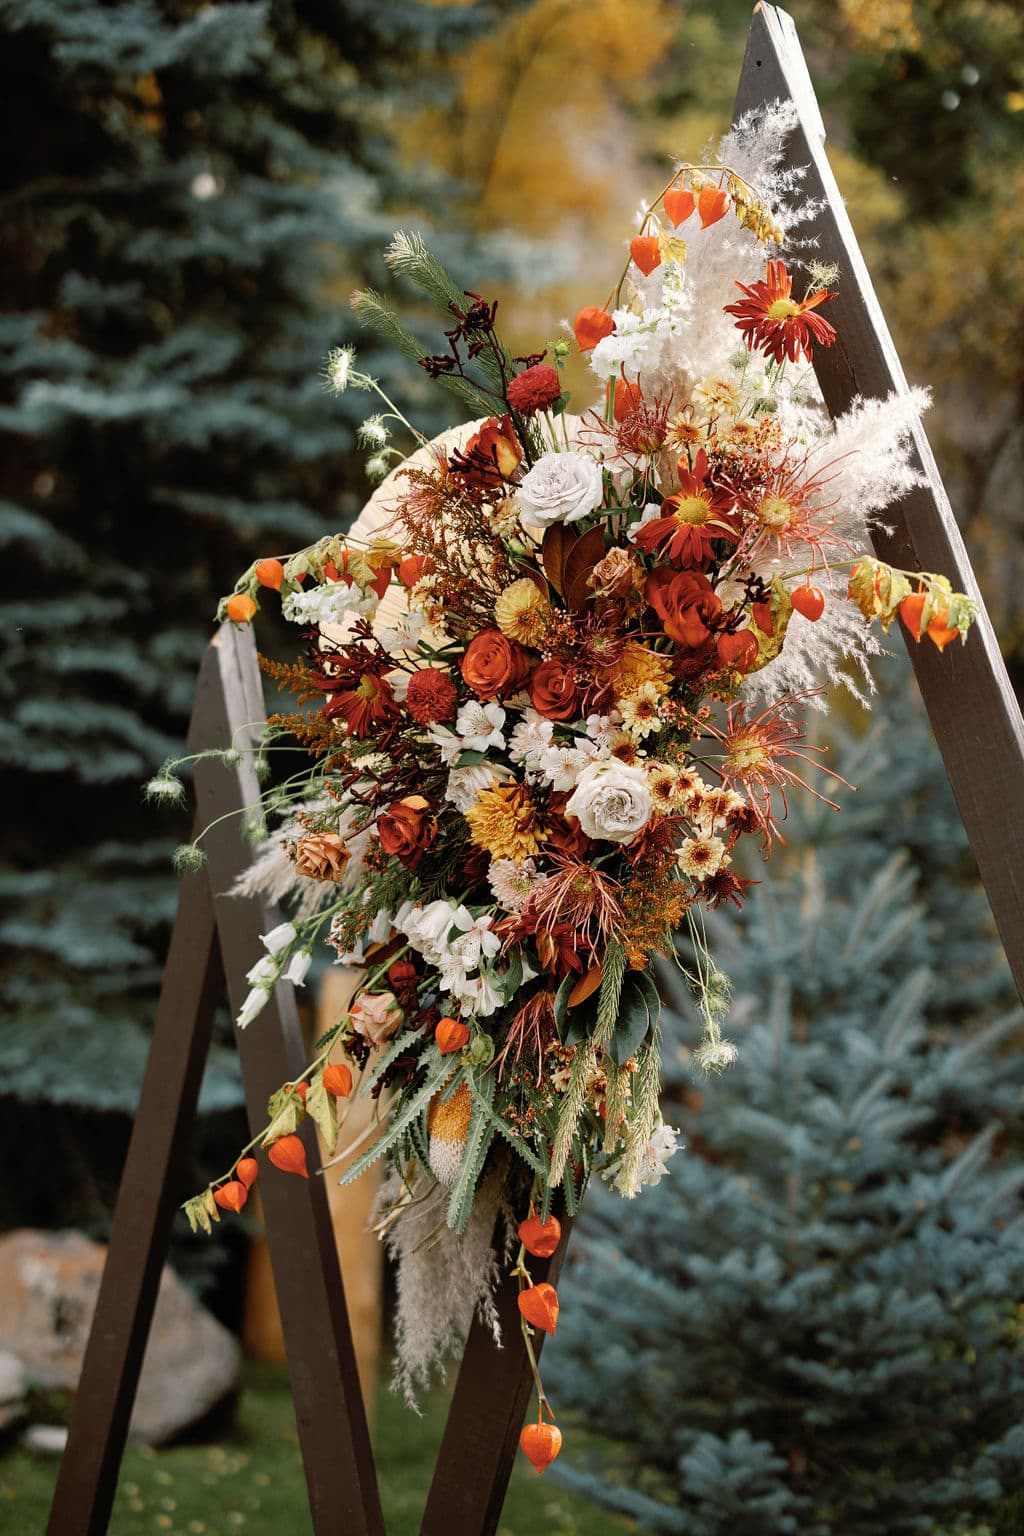 Gorgeous fall floral arrangements for mount princeton hot springs wedding ceremony decor